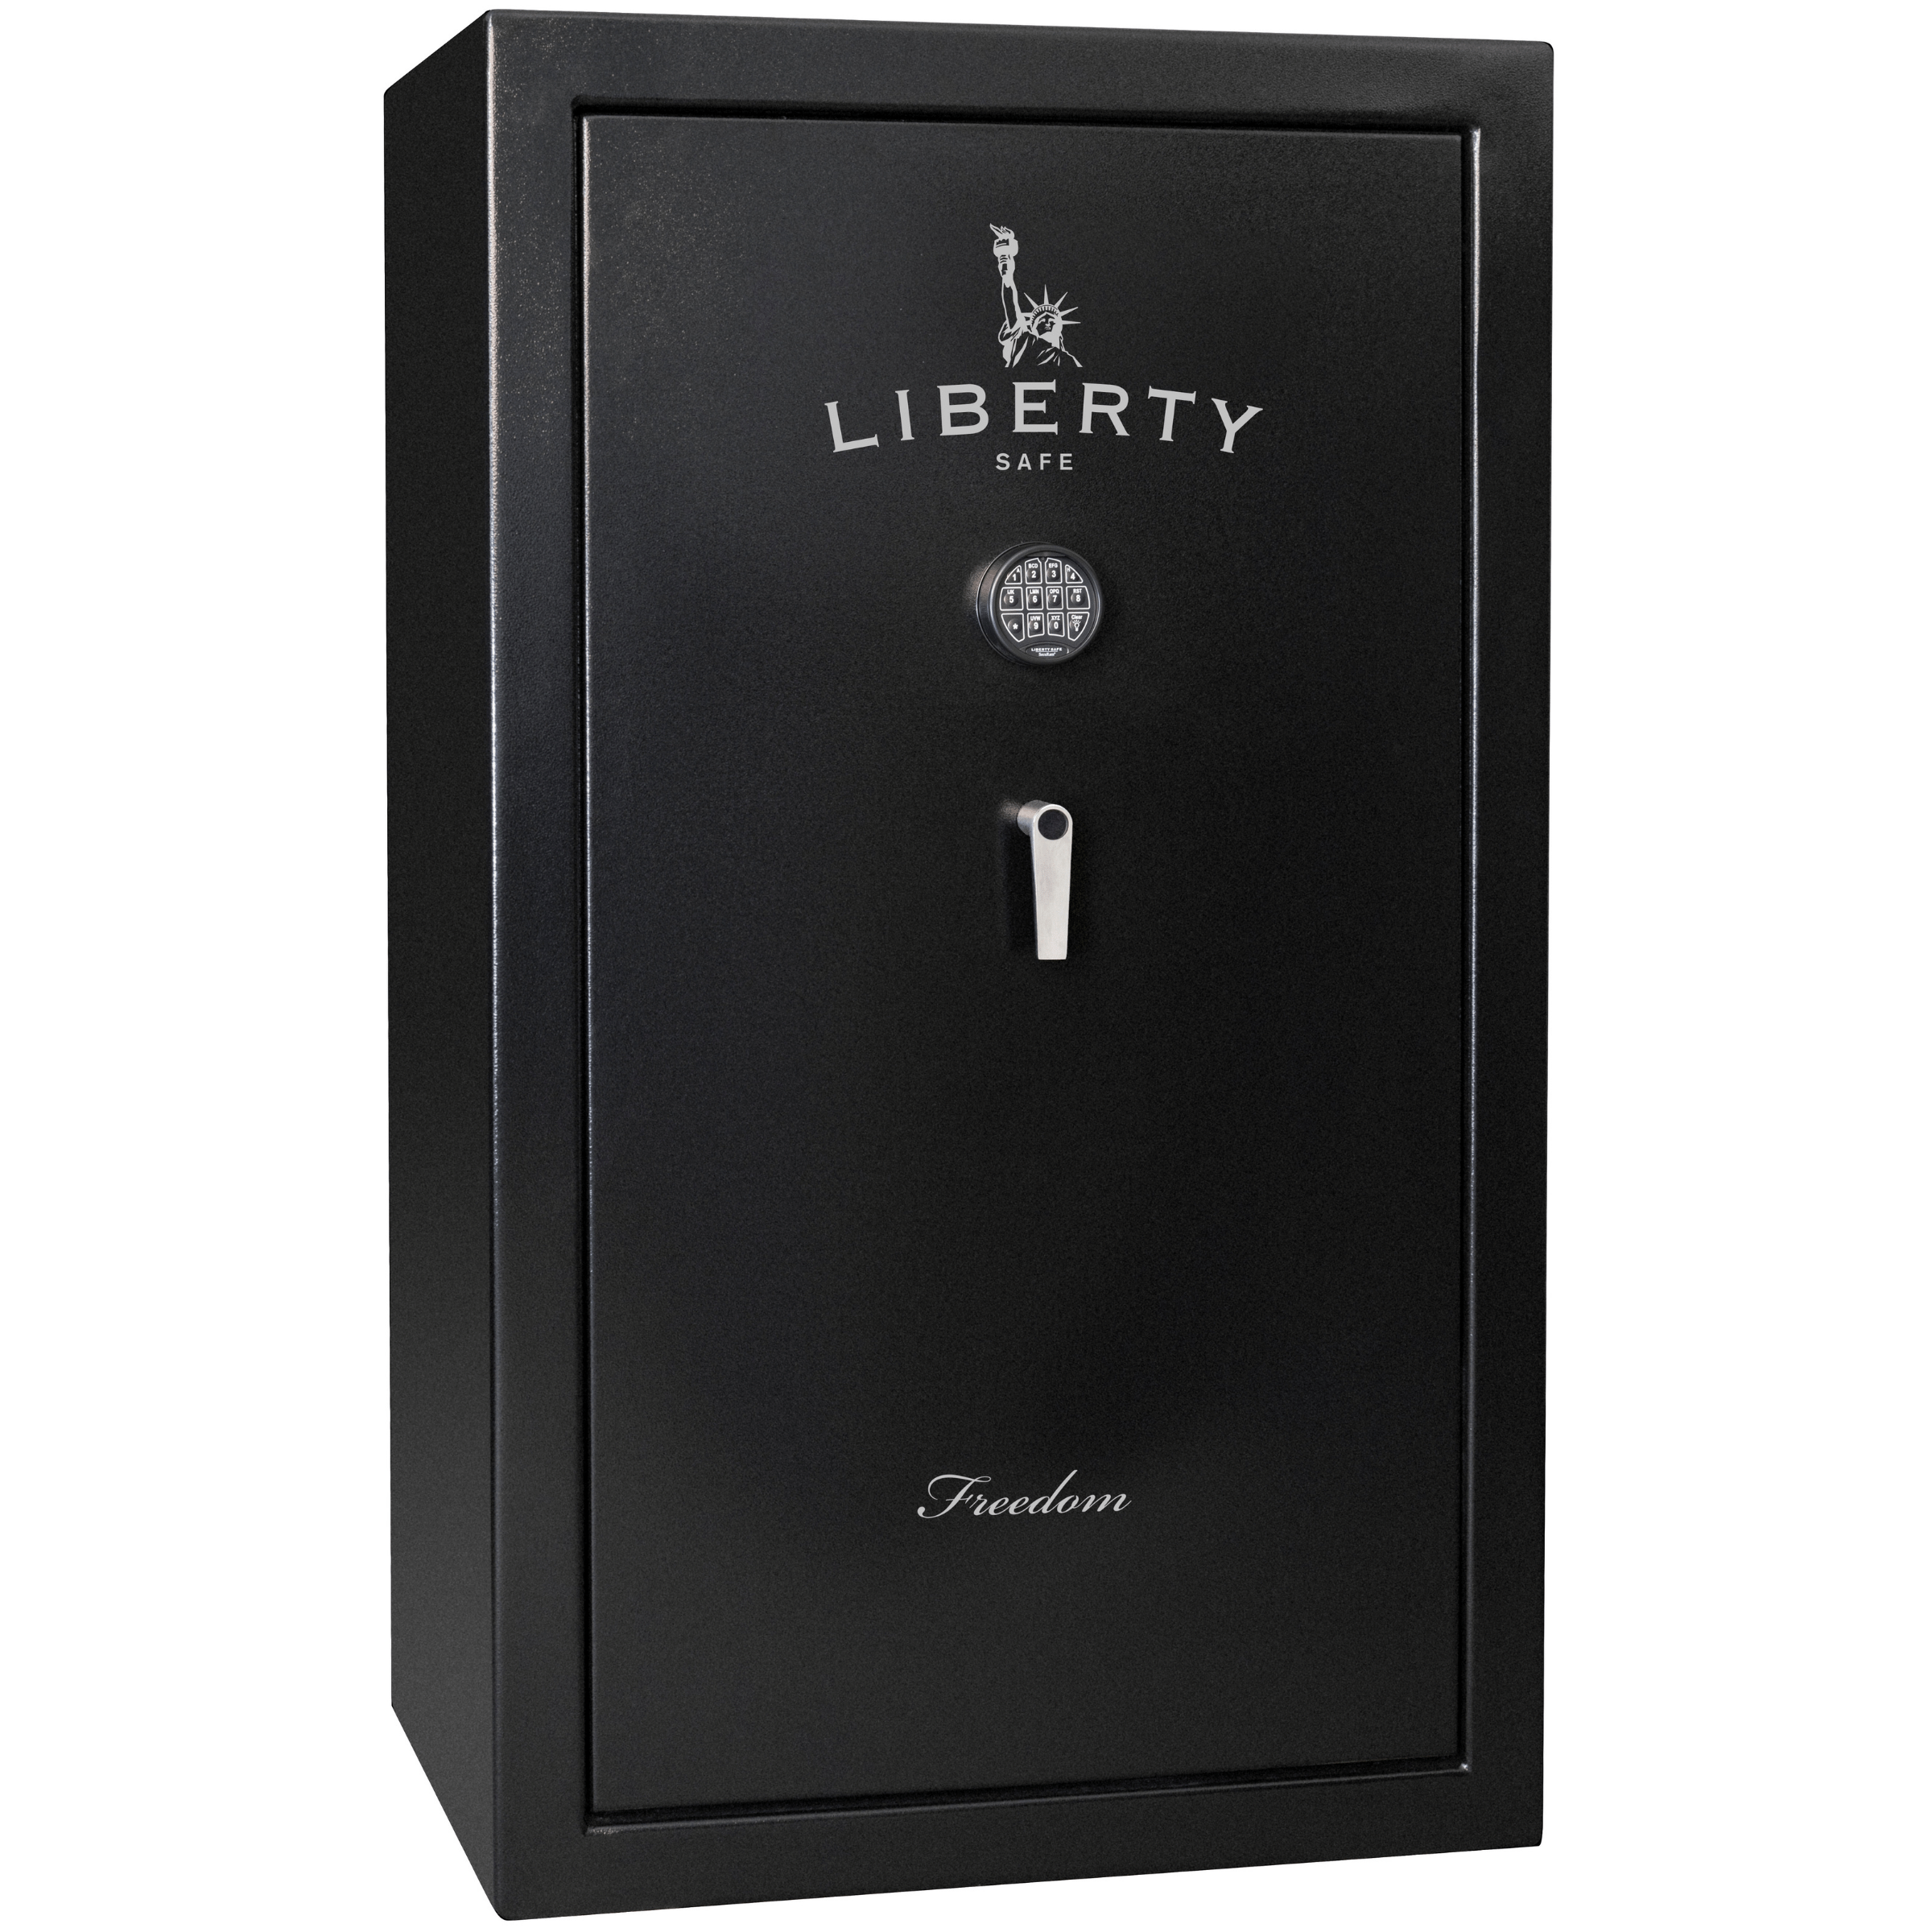 Liberty Freedom Series Gun Safe Configurator, view 3